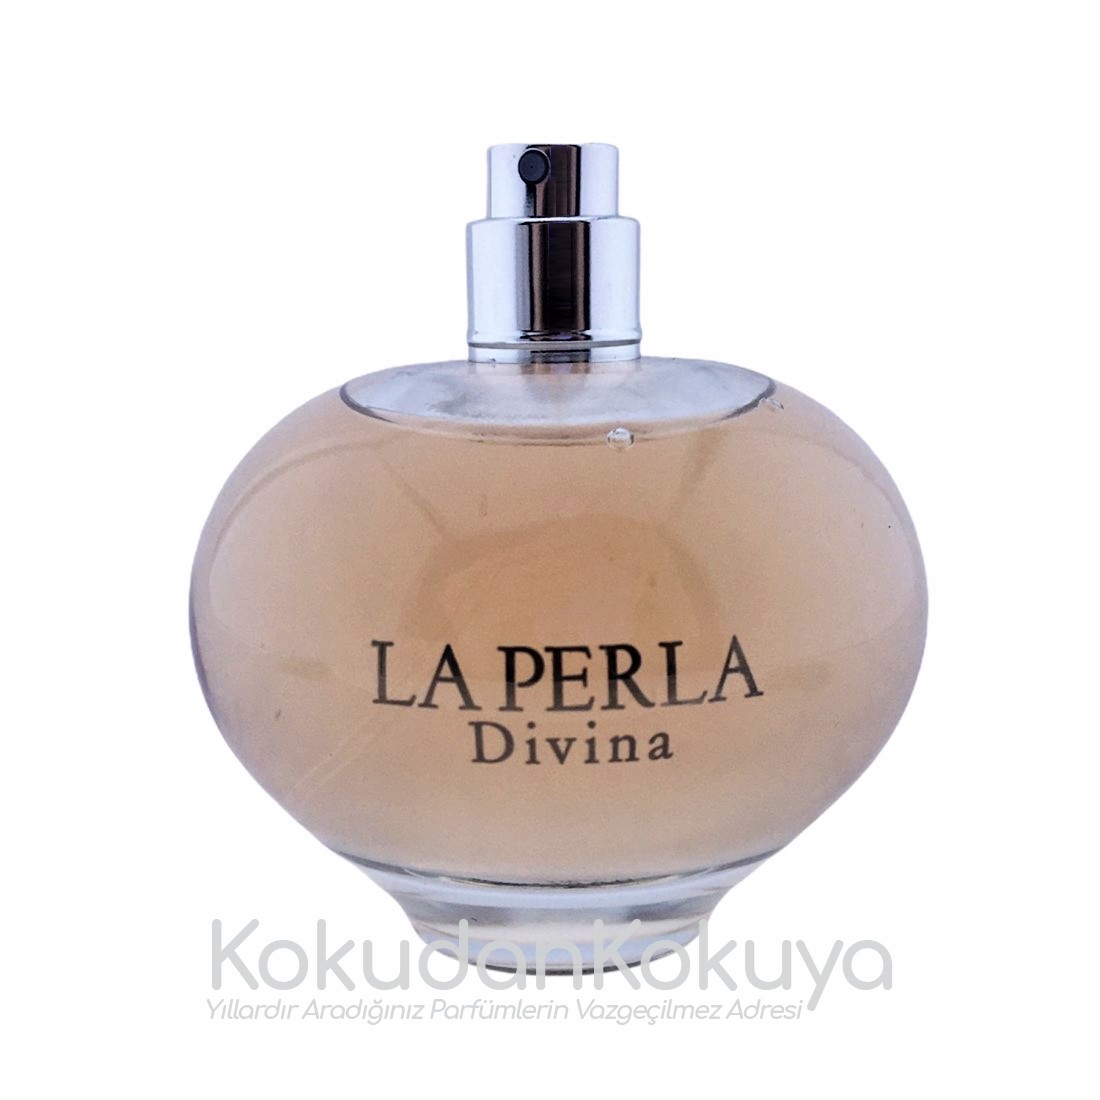 LA PERLA Divina EDT Parfüm Kadın 80ml Eau De Toilette (EDT) Sprey 